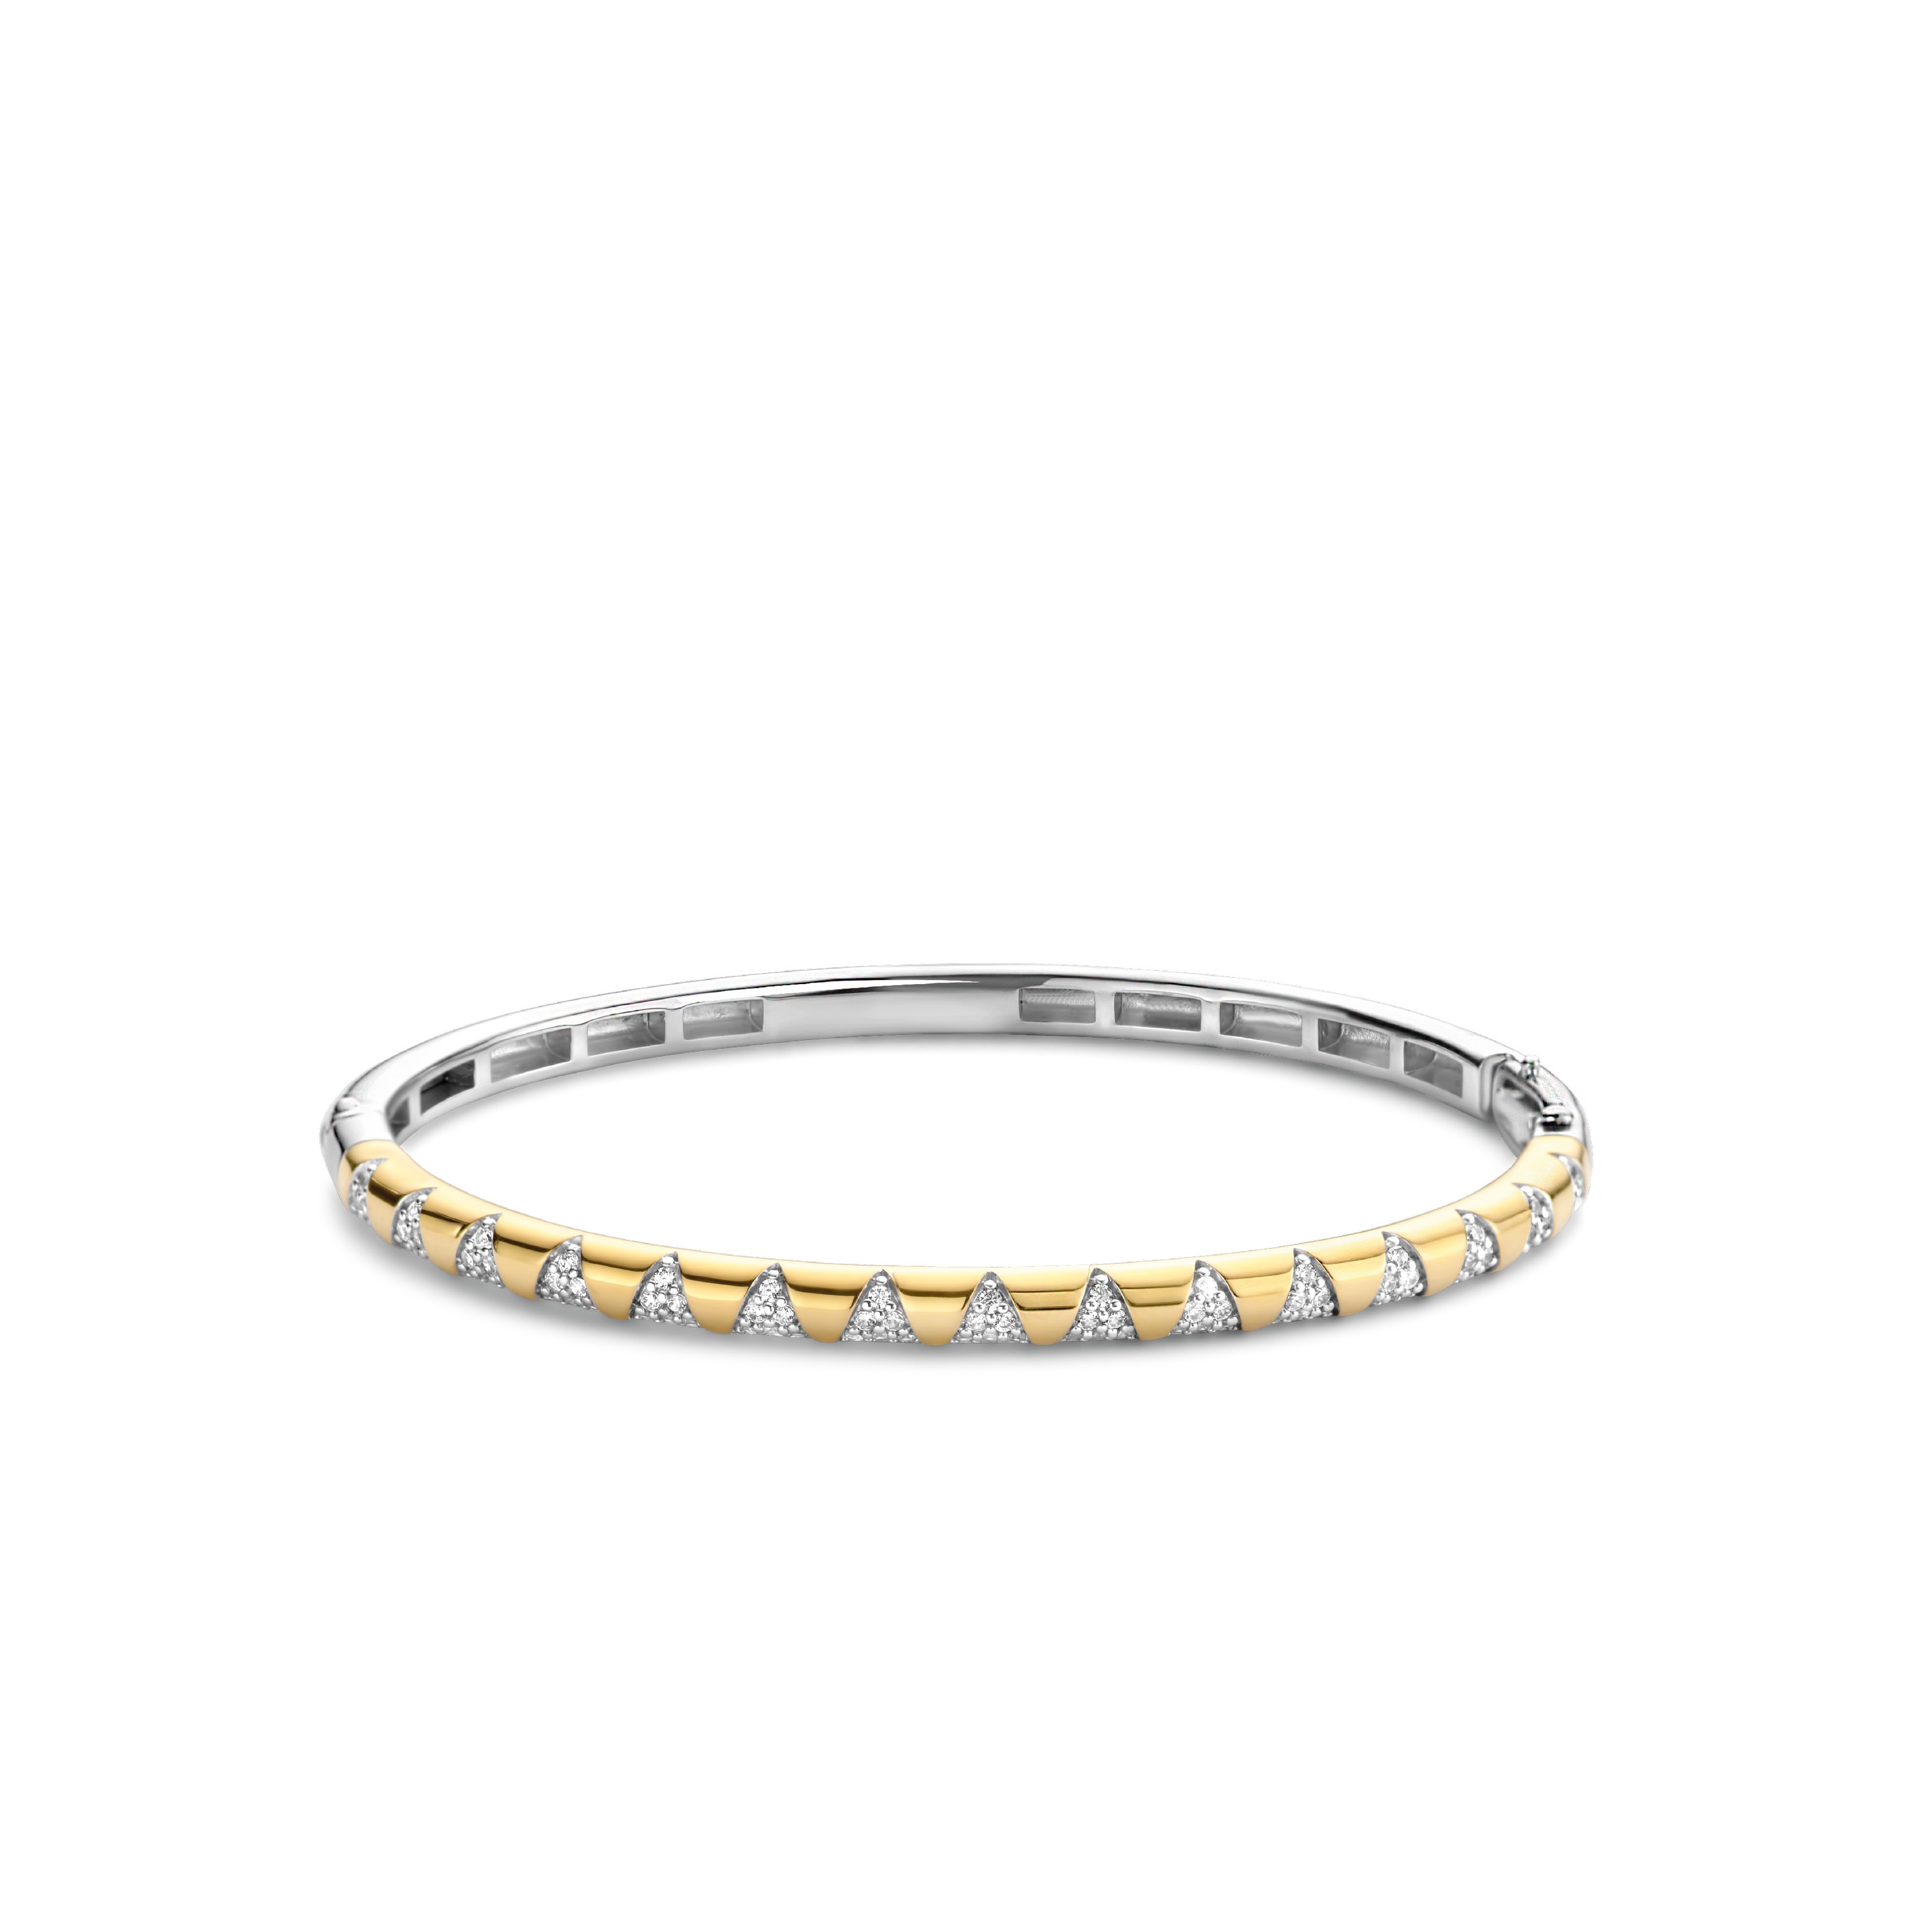 TI SENTO - Milano Bracelet 2955ZY Gala Jewelers Inc. White Oak, PA